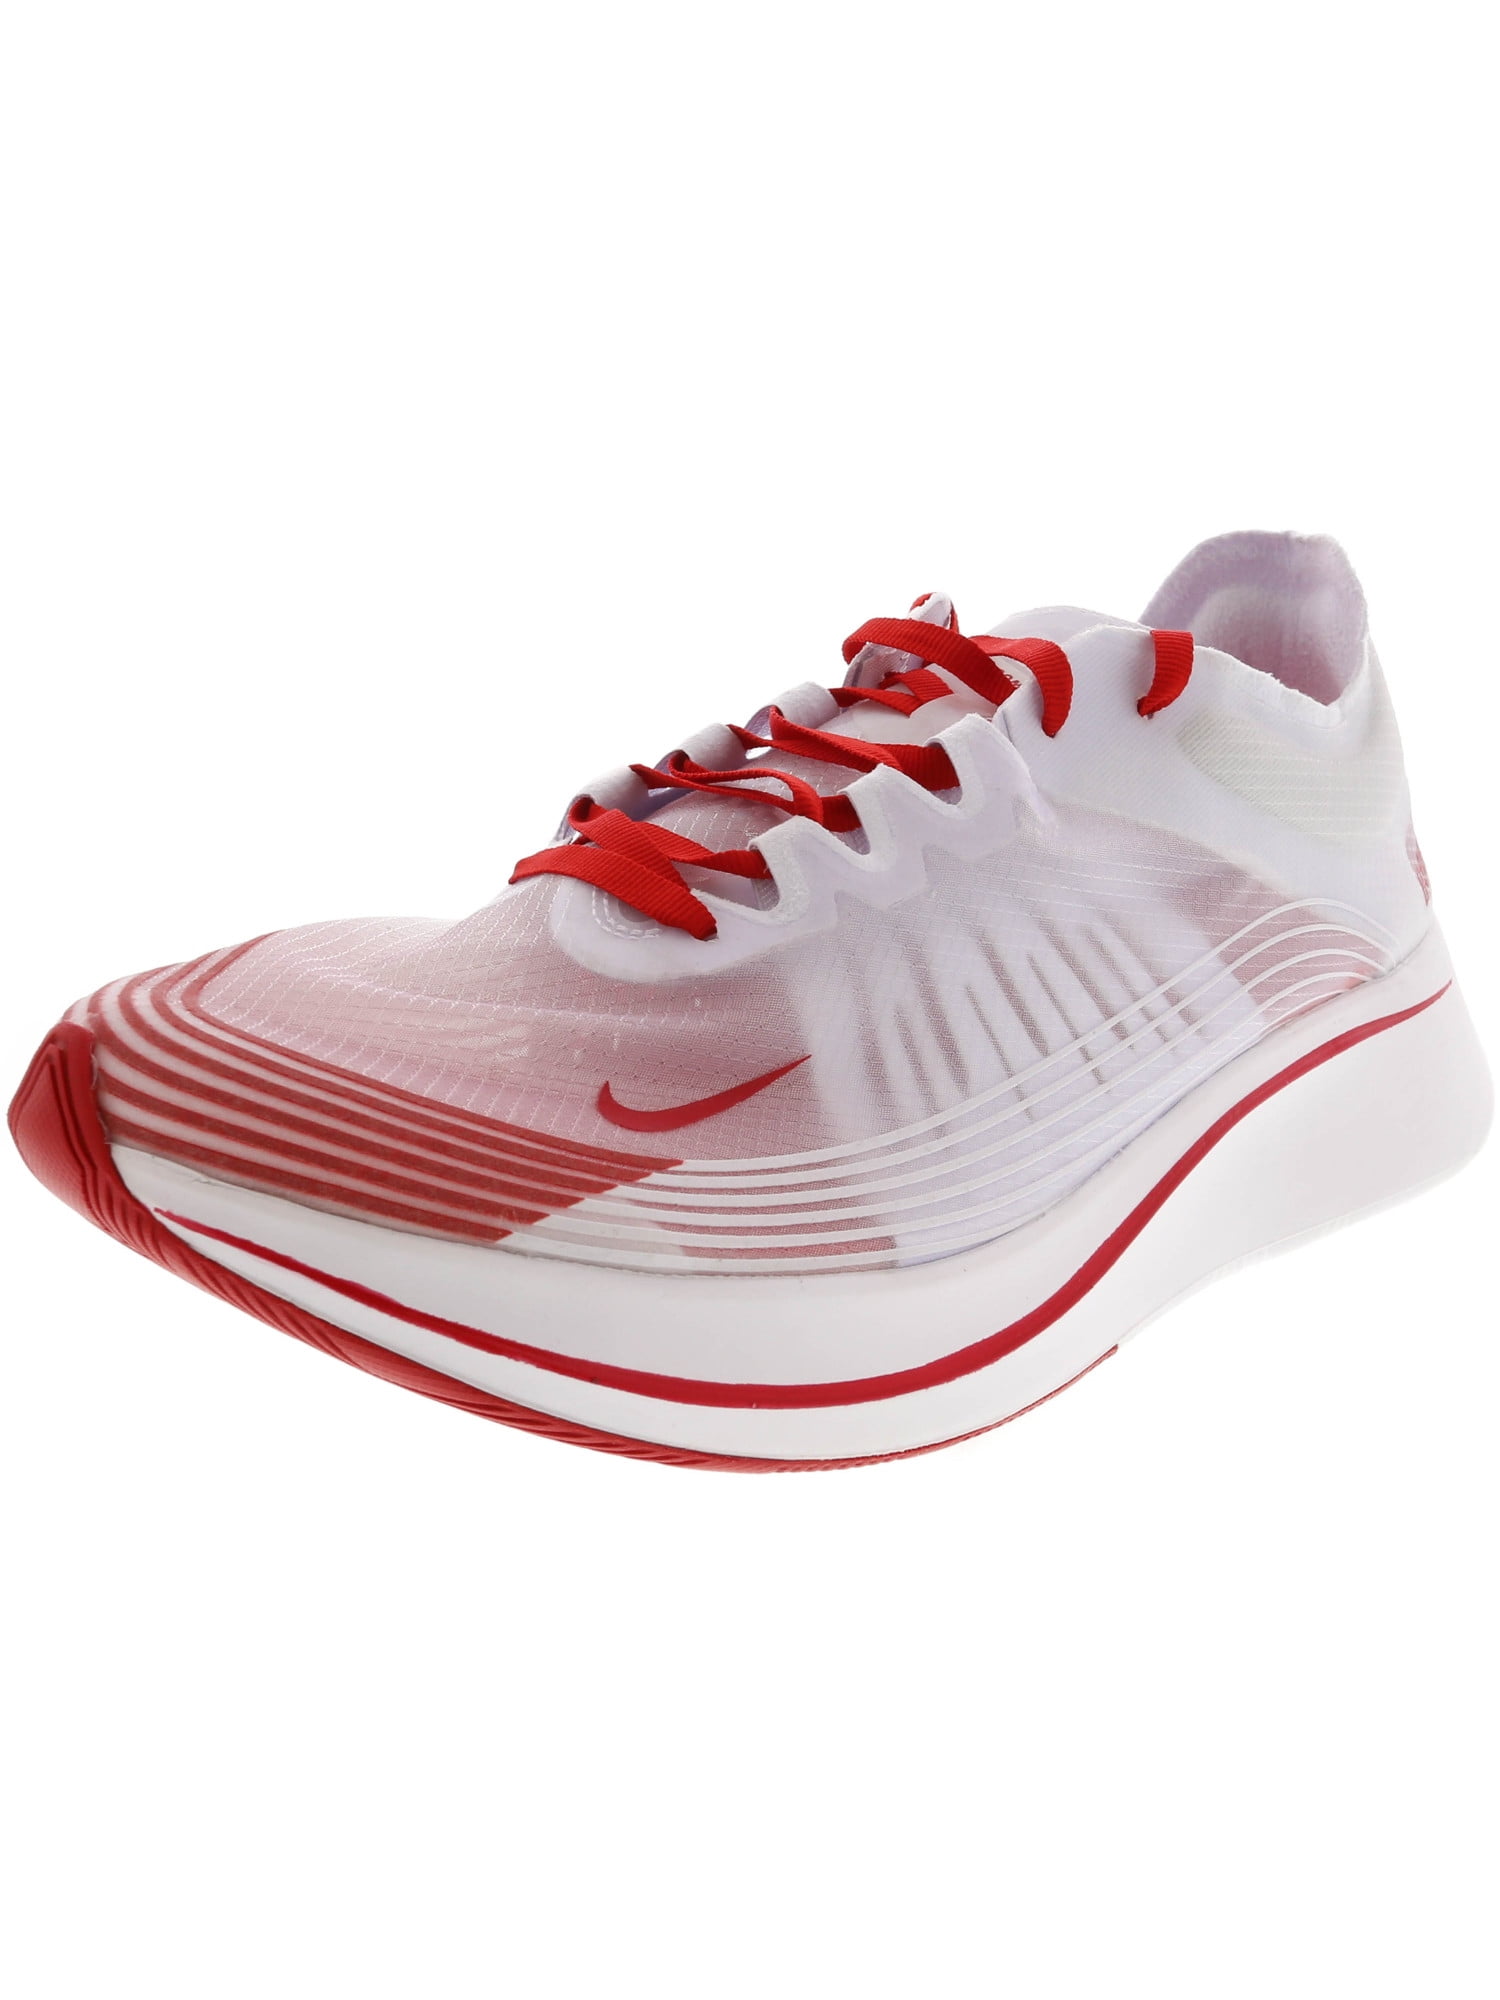 Nike Men's Zoom Sp / University Red Ankle-High Running Shoe - 11M - Walmart.com